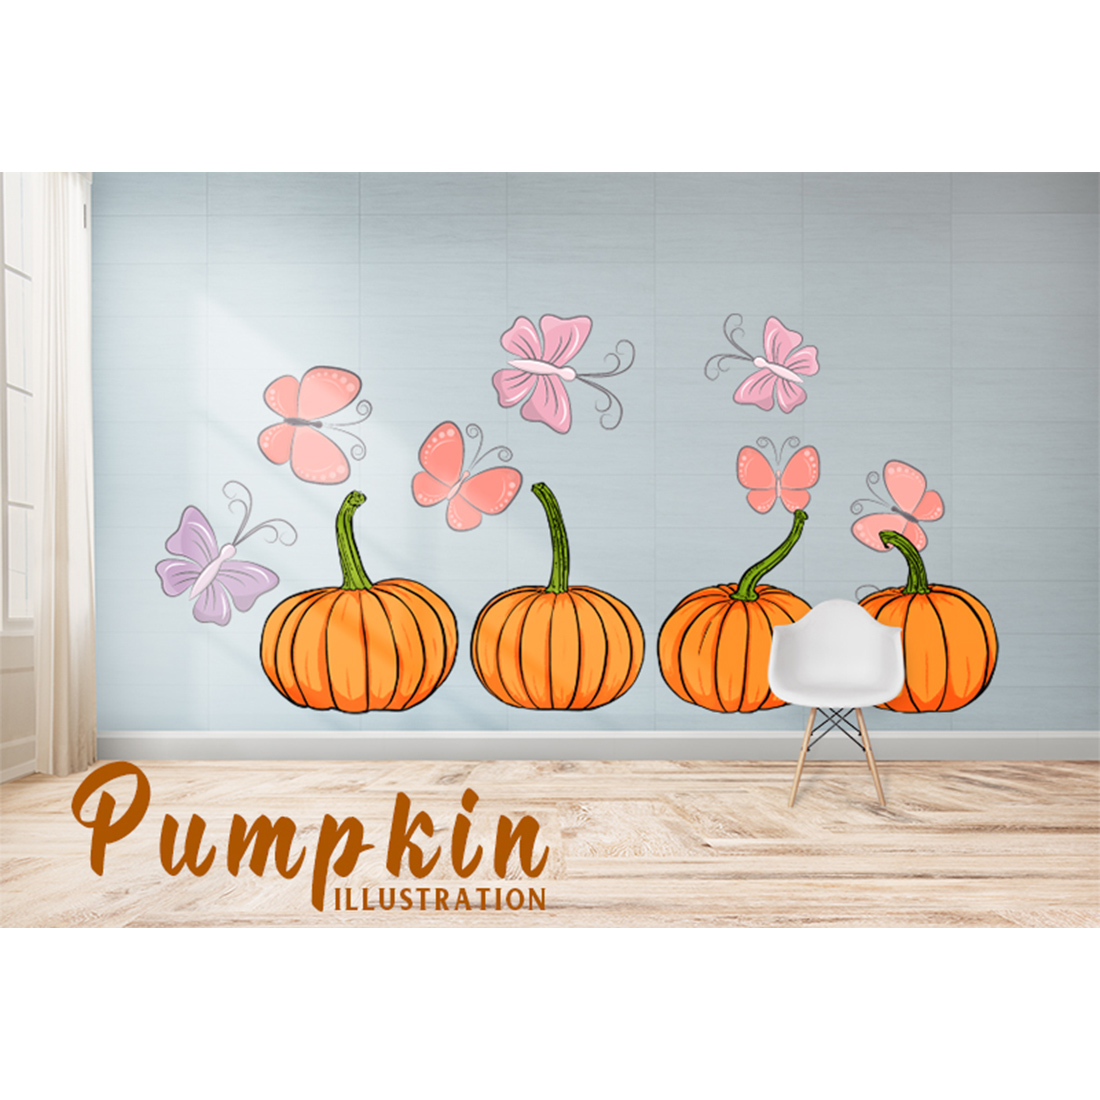 Irresistible image with pumpkins